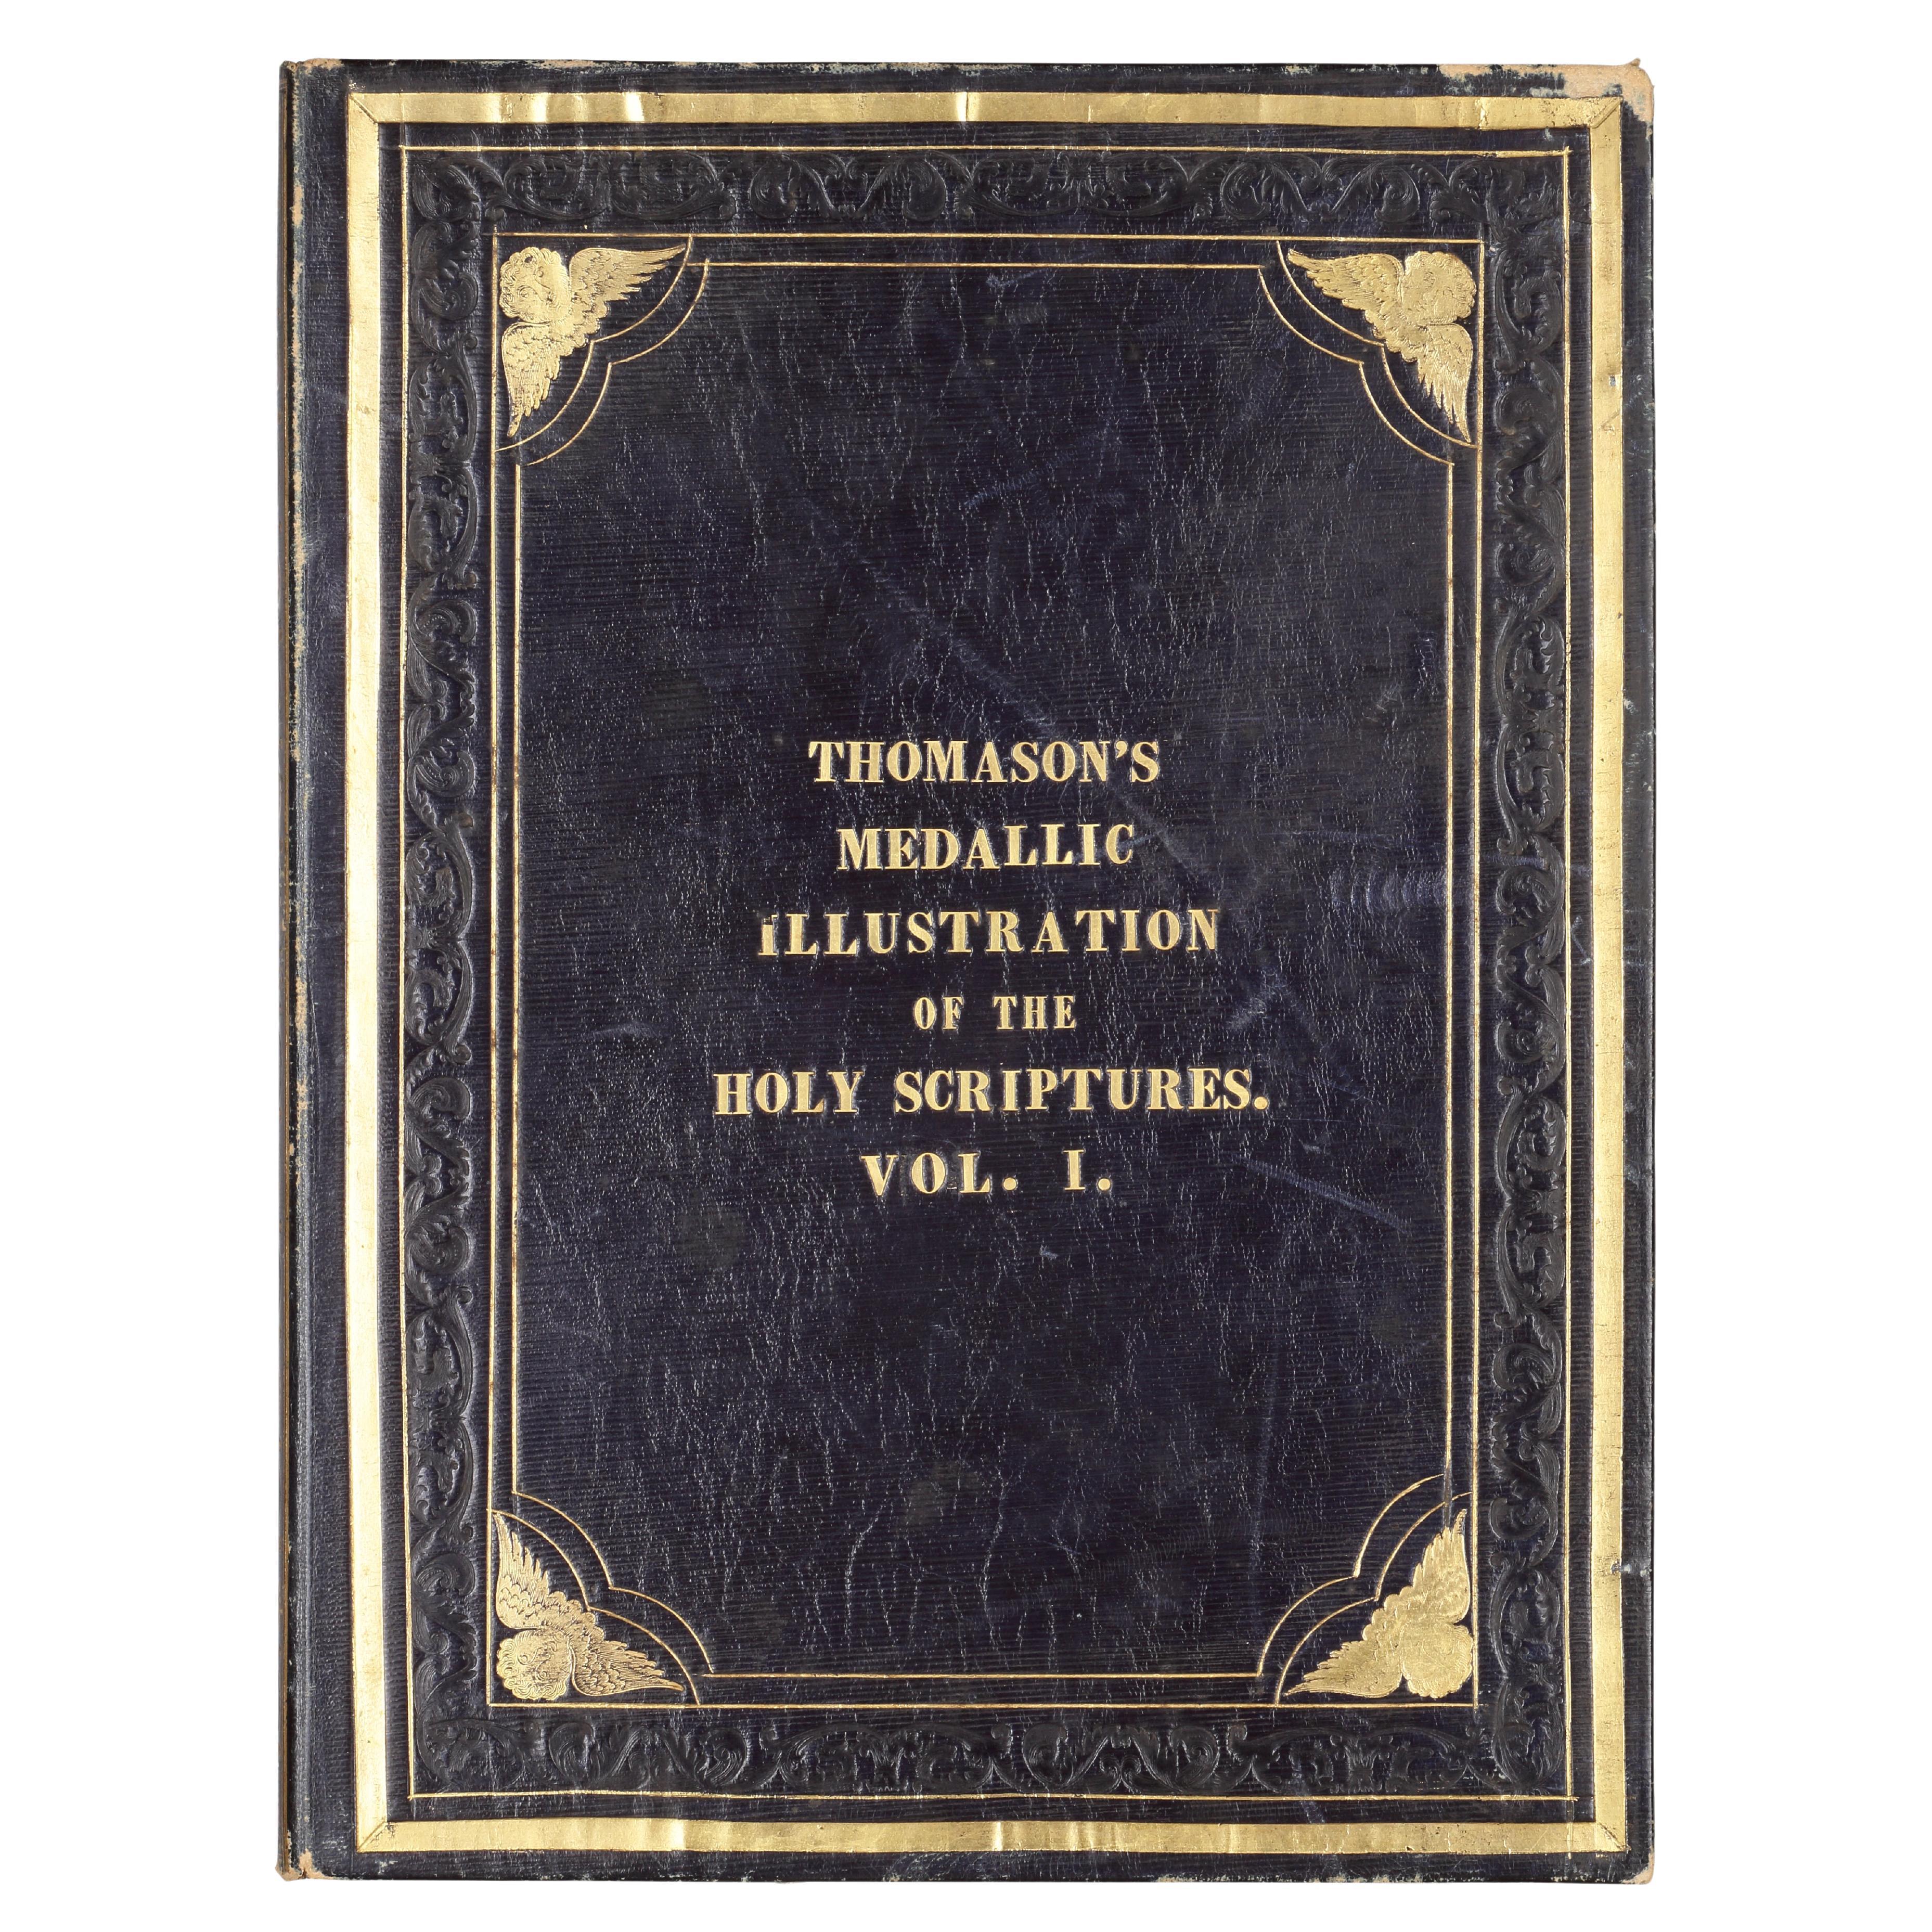 The 'Medallic Illustrations of The Holy Scriptures' par Sir Edward Thomason